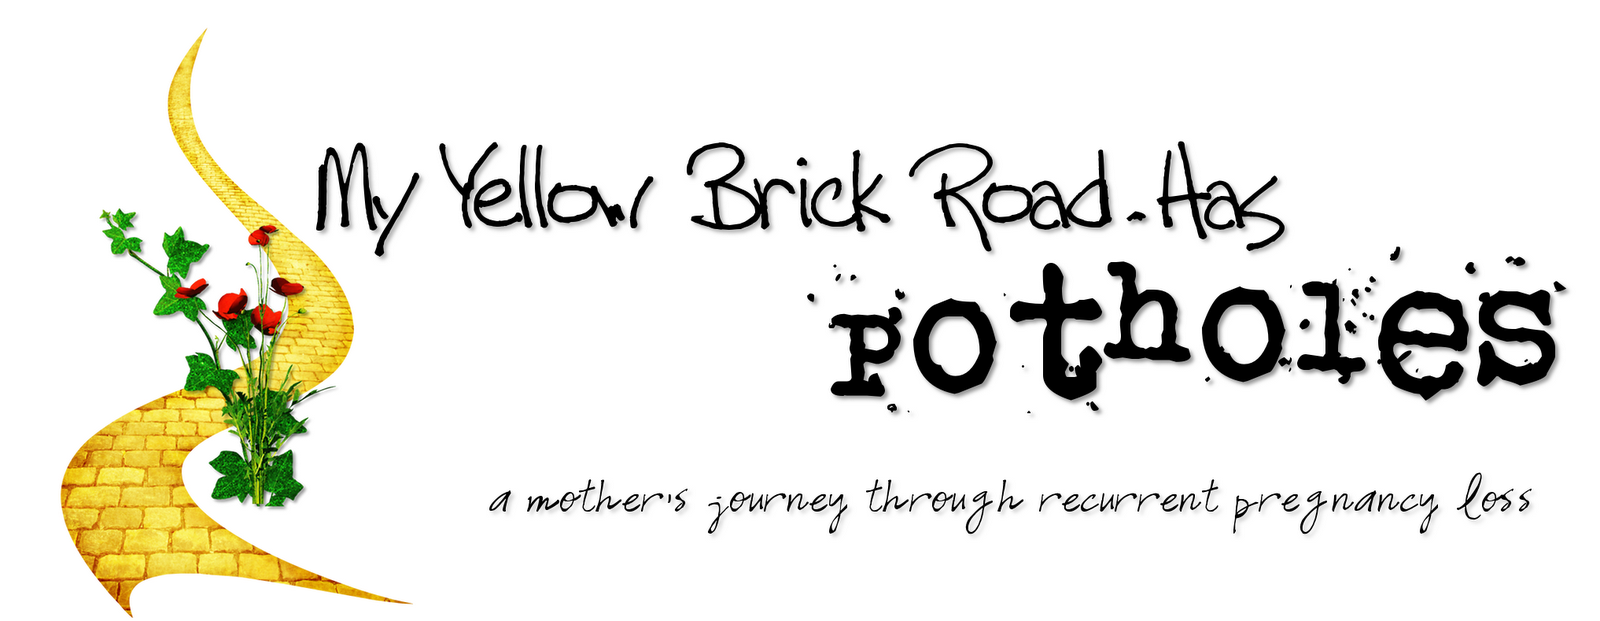 My Yellow Brick Road Has Potholes